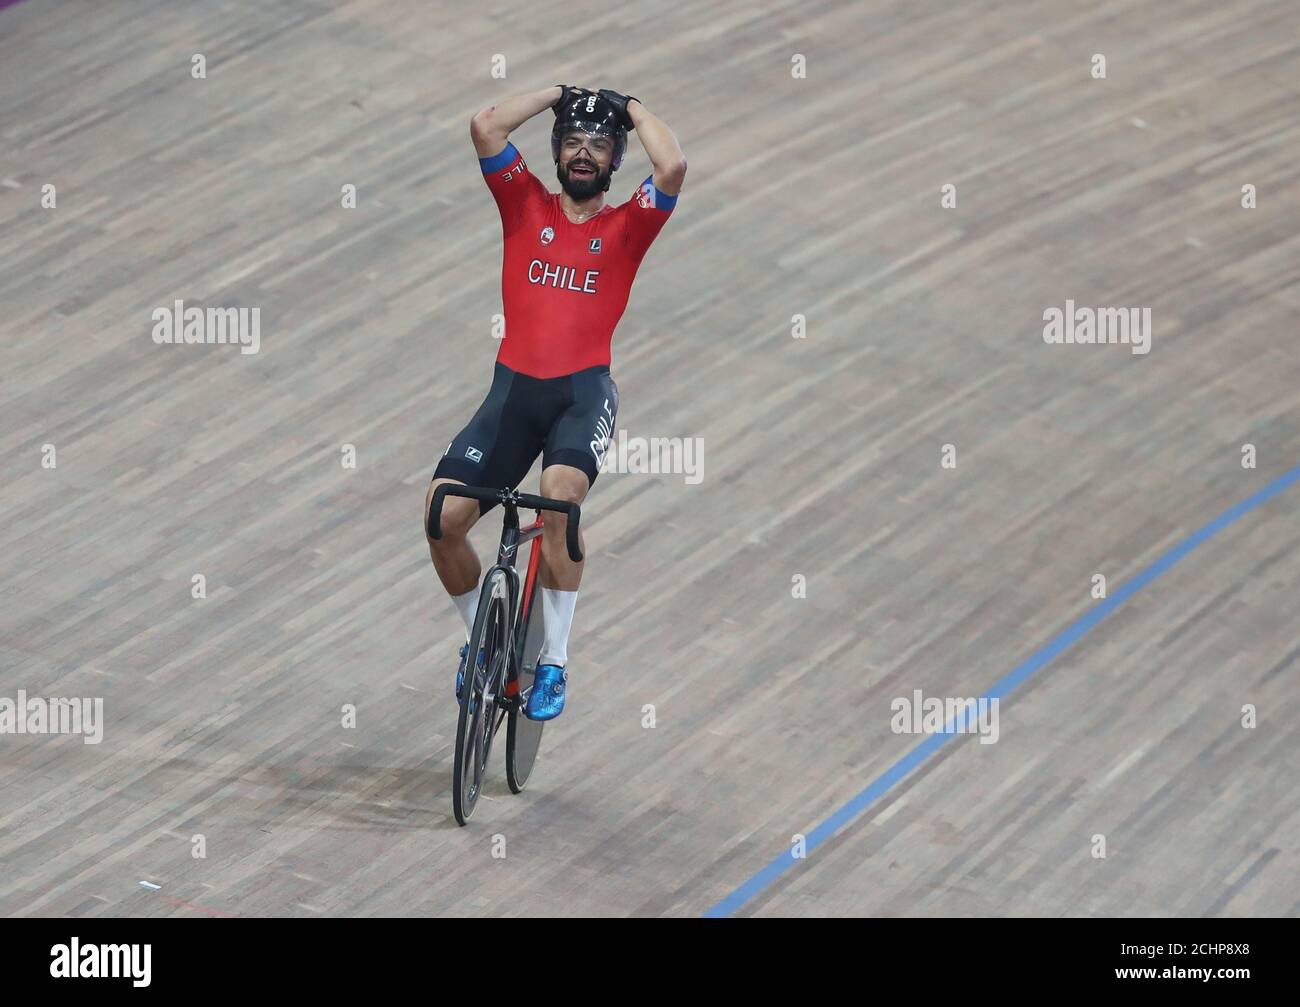 XVIII Juegos Panamericanos - Lima 2019 - Ciclismo - Madison Men final final  - Velódromo, Villa Deportiva Nacional, Lima, Perú - 4 de agosto de 2019.  Felipe Penaloza, chileno, celebra el final